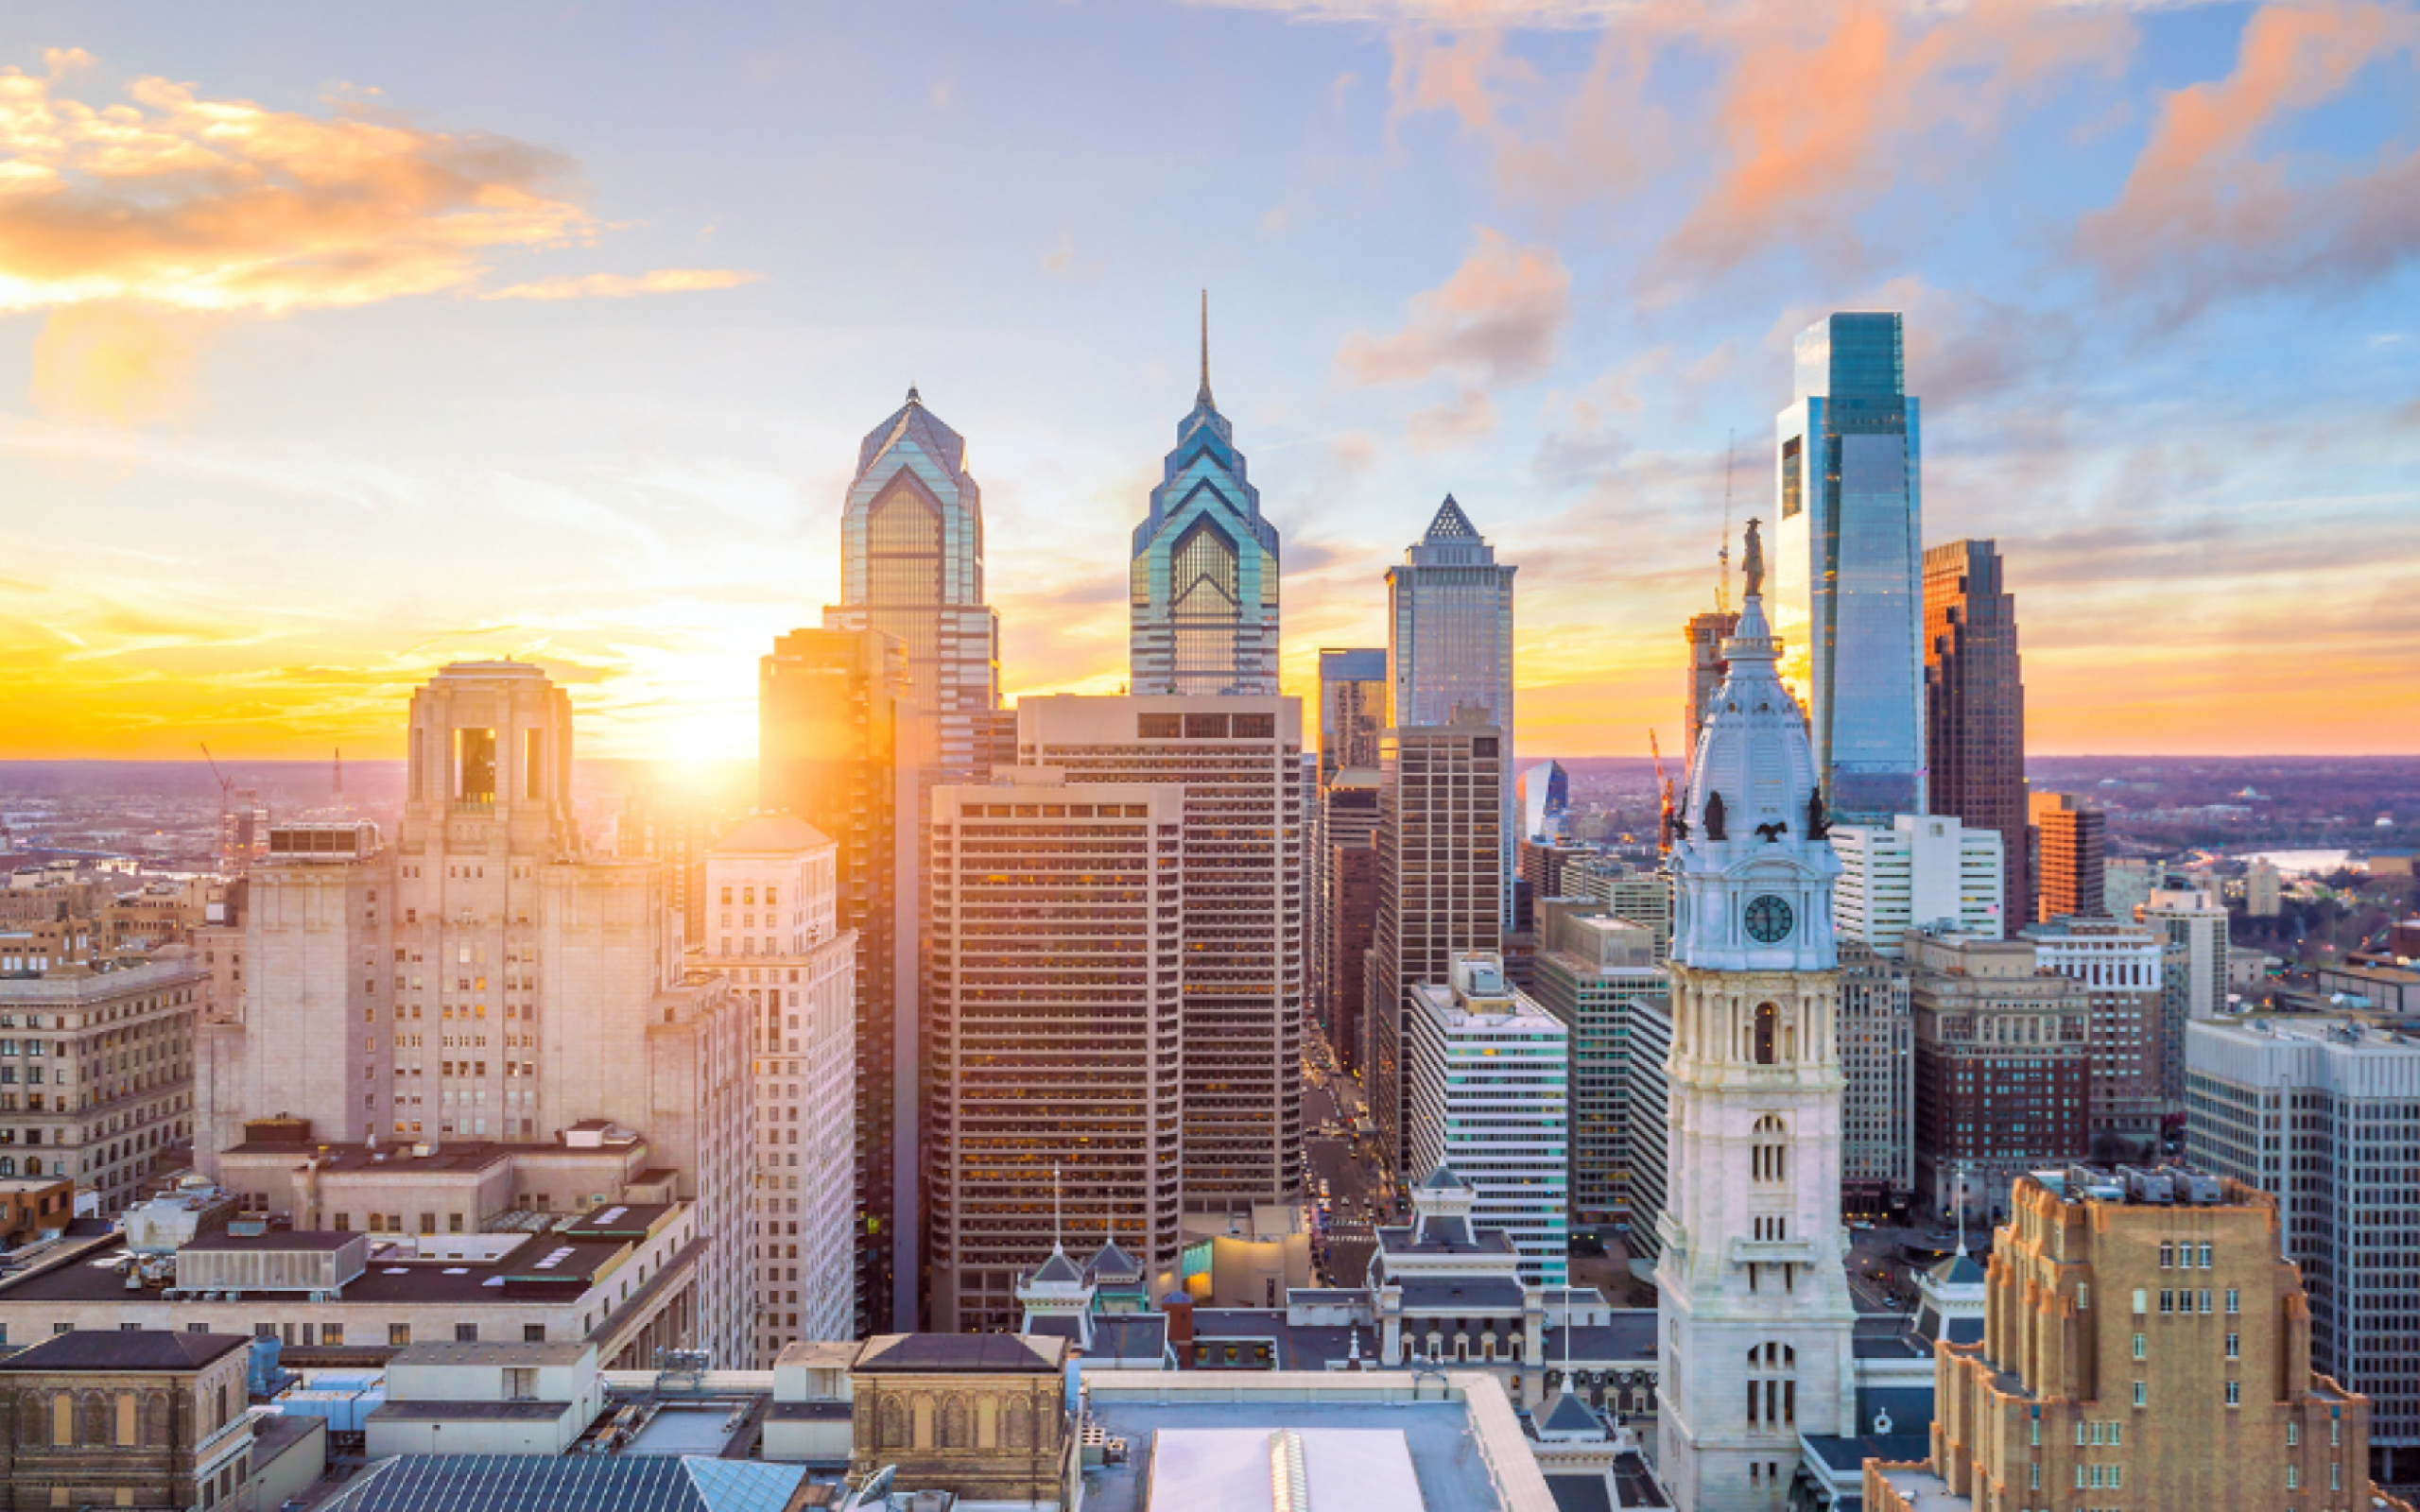 The skyline of Philadelphia at sunset